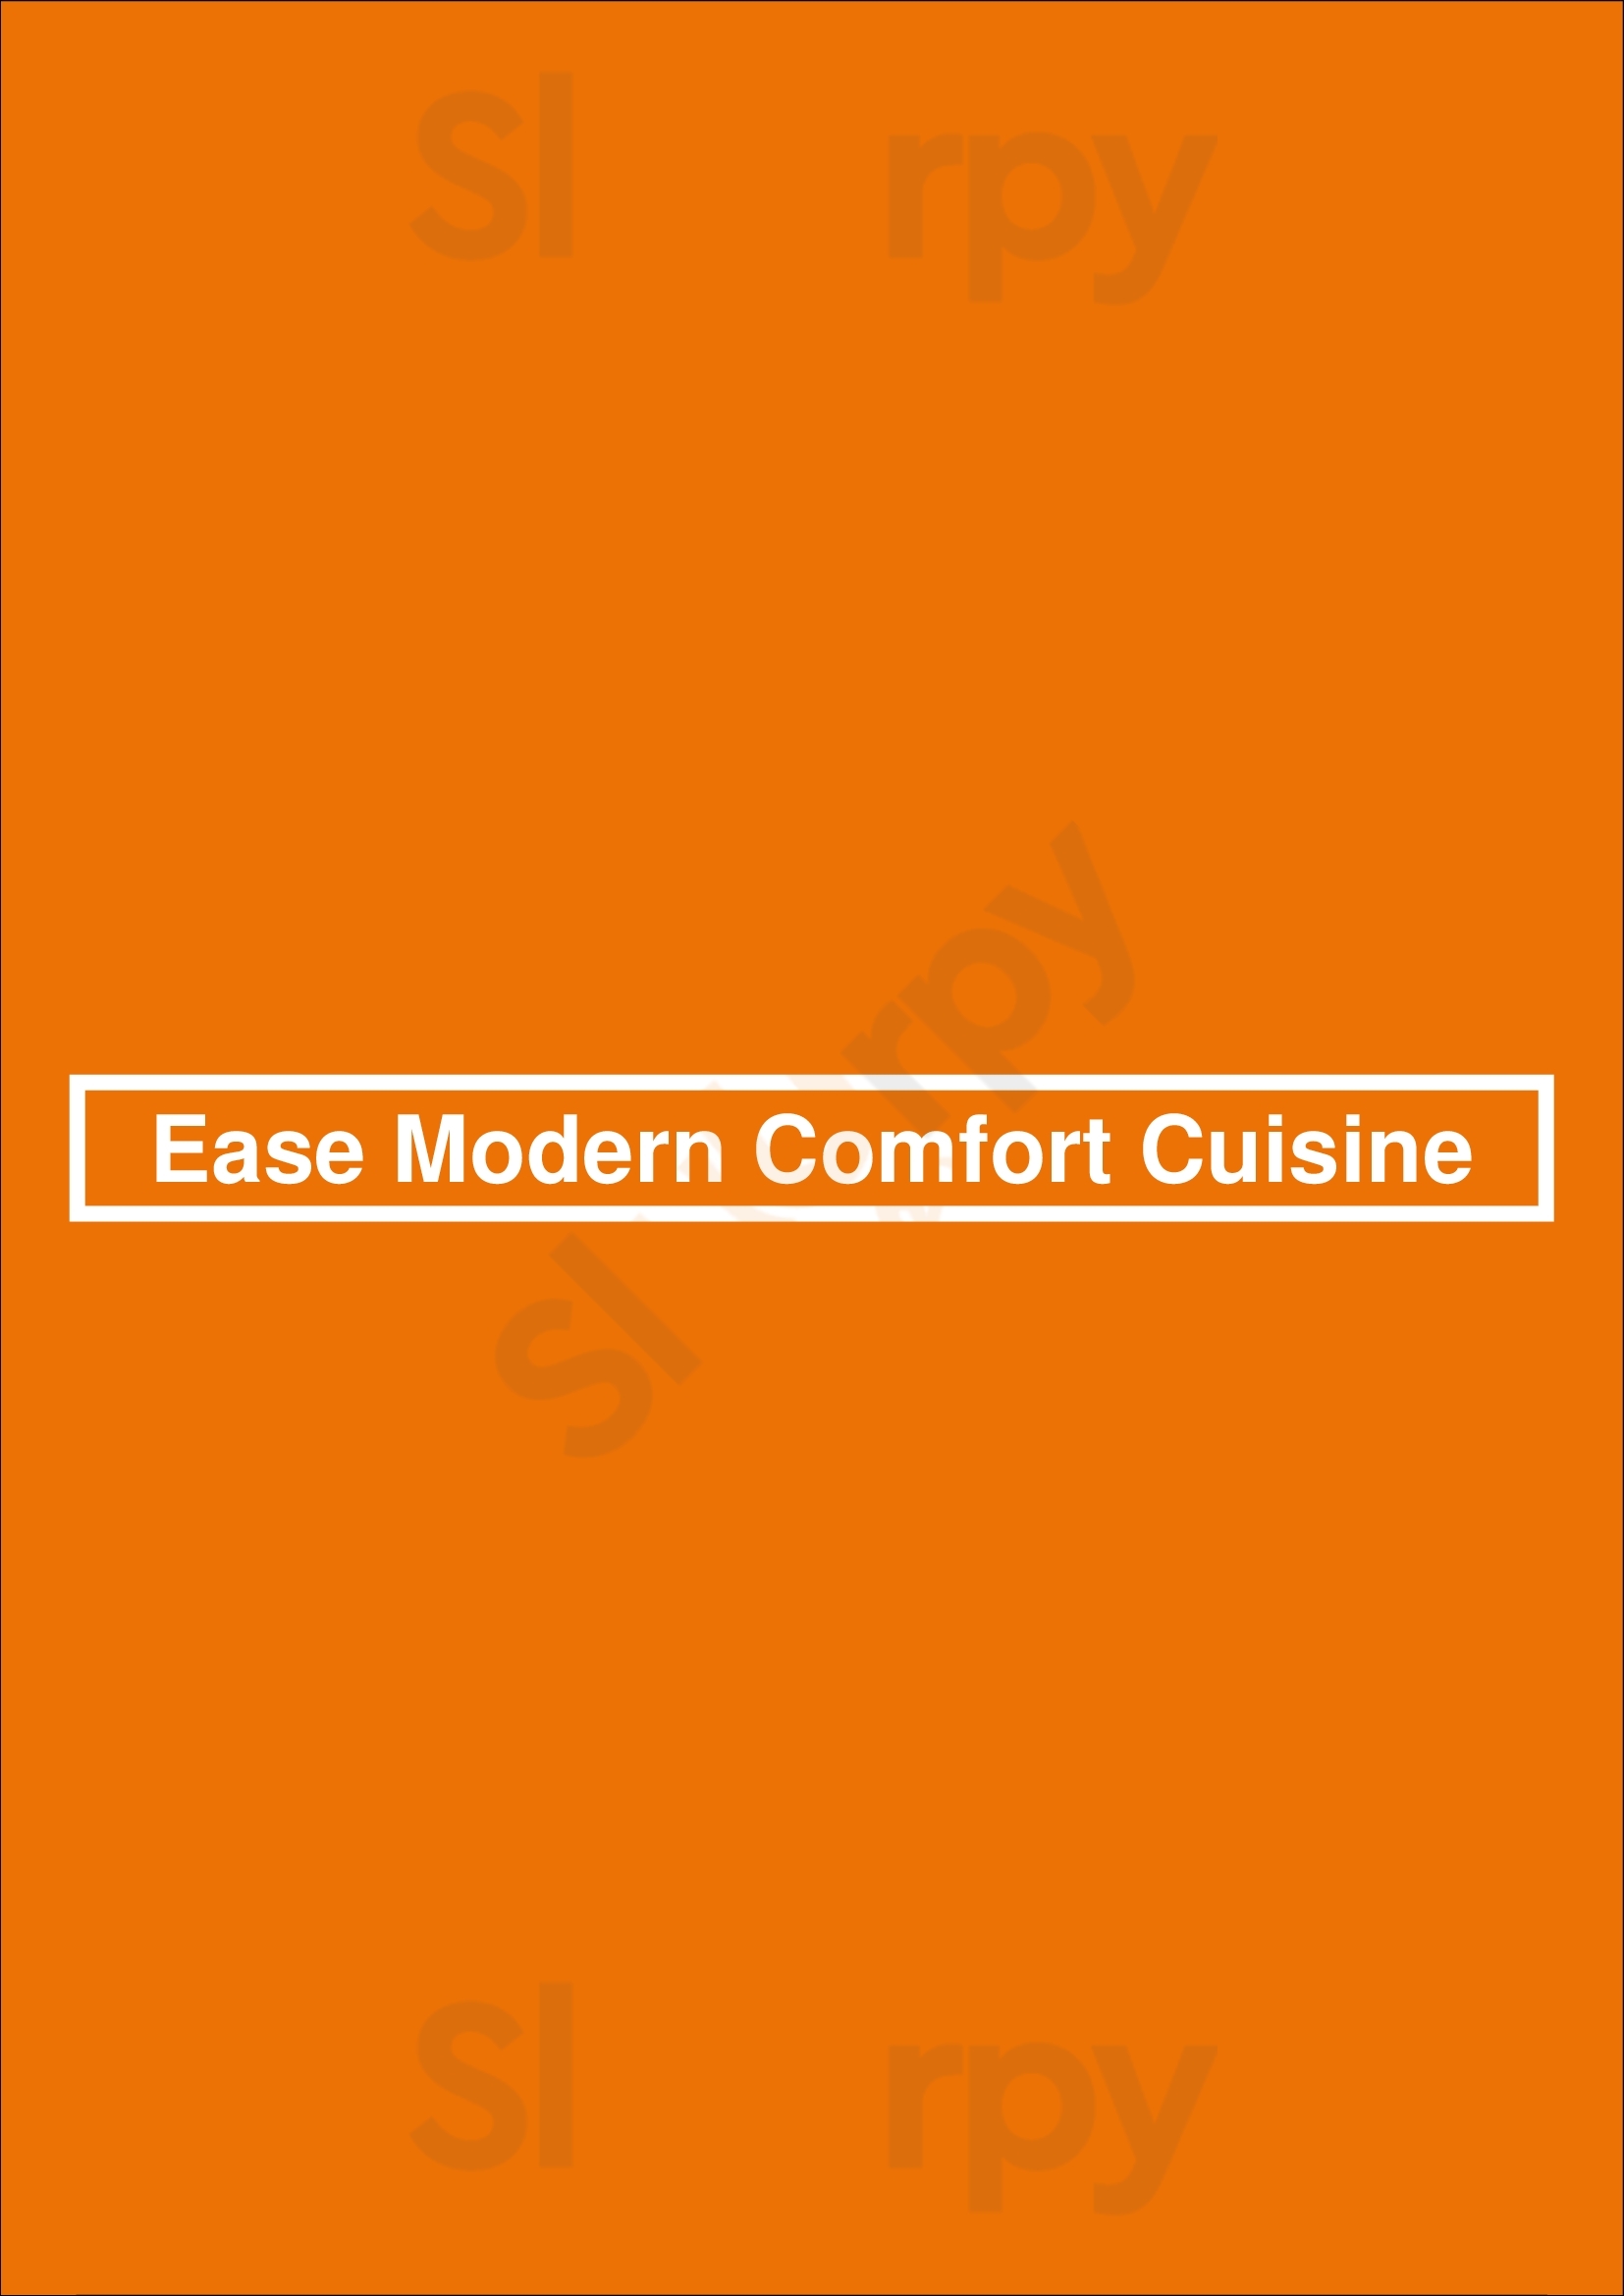 Ease Modern Comfort Cuisine Pittsburgh Menu - 1